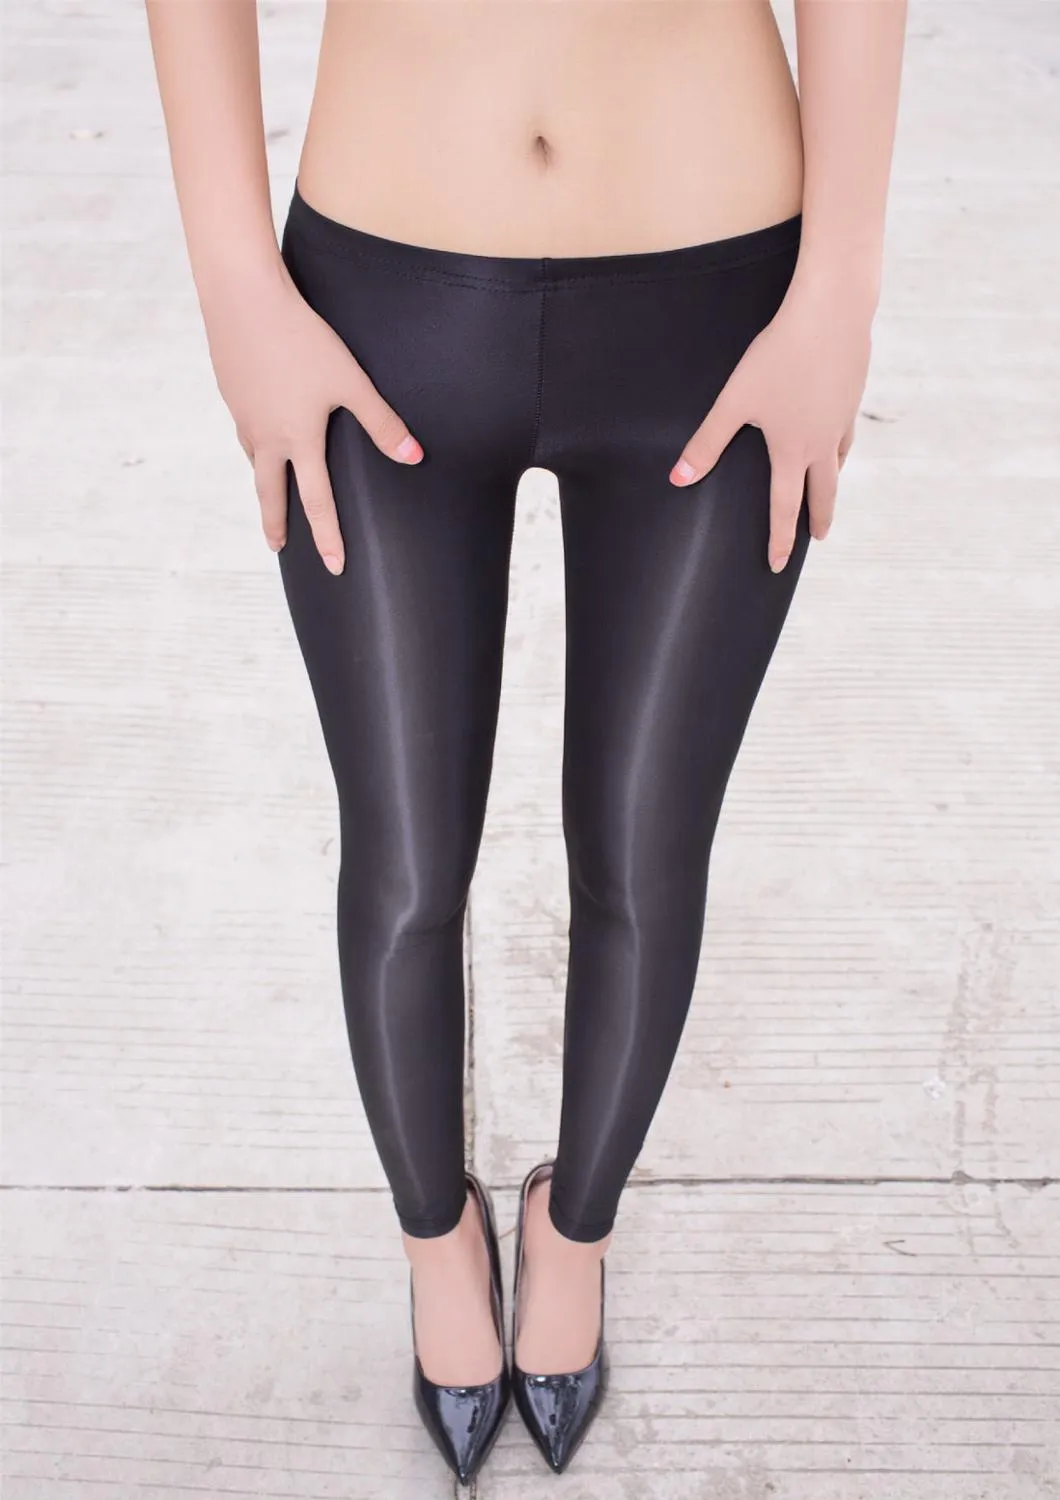 Öl glänzende Crotchless Leggings durchsichtige transparente exotische  Bleistifthose Fitness Jogger Damenhose